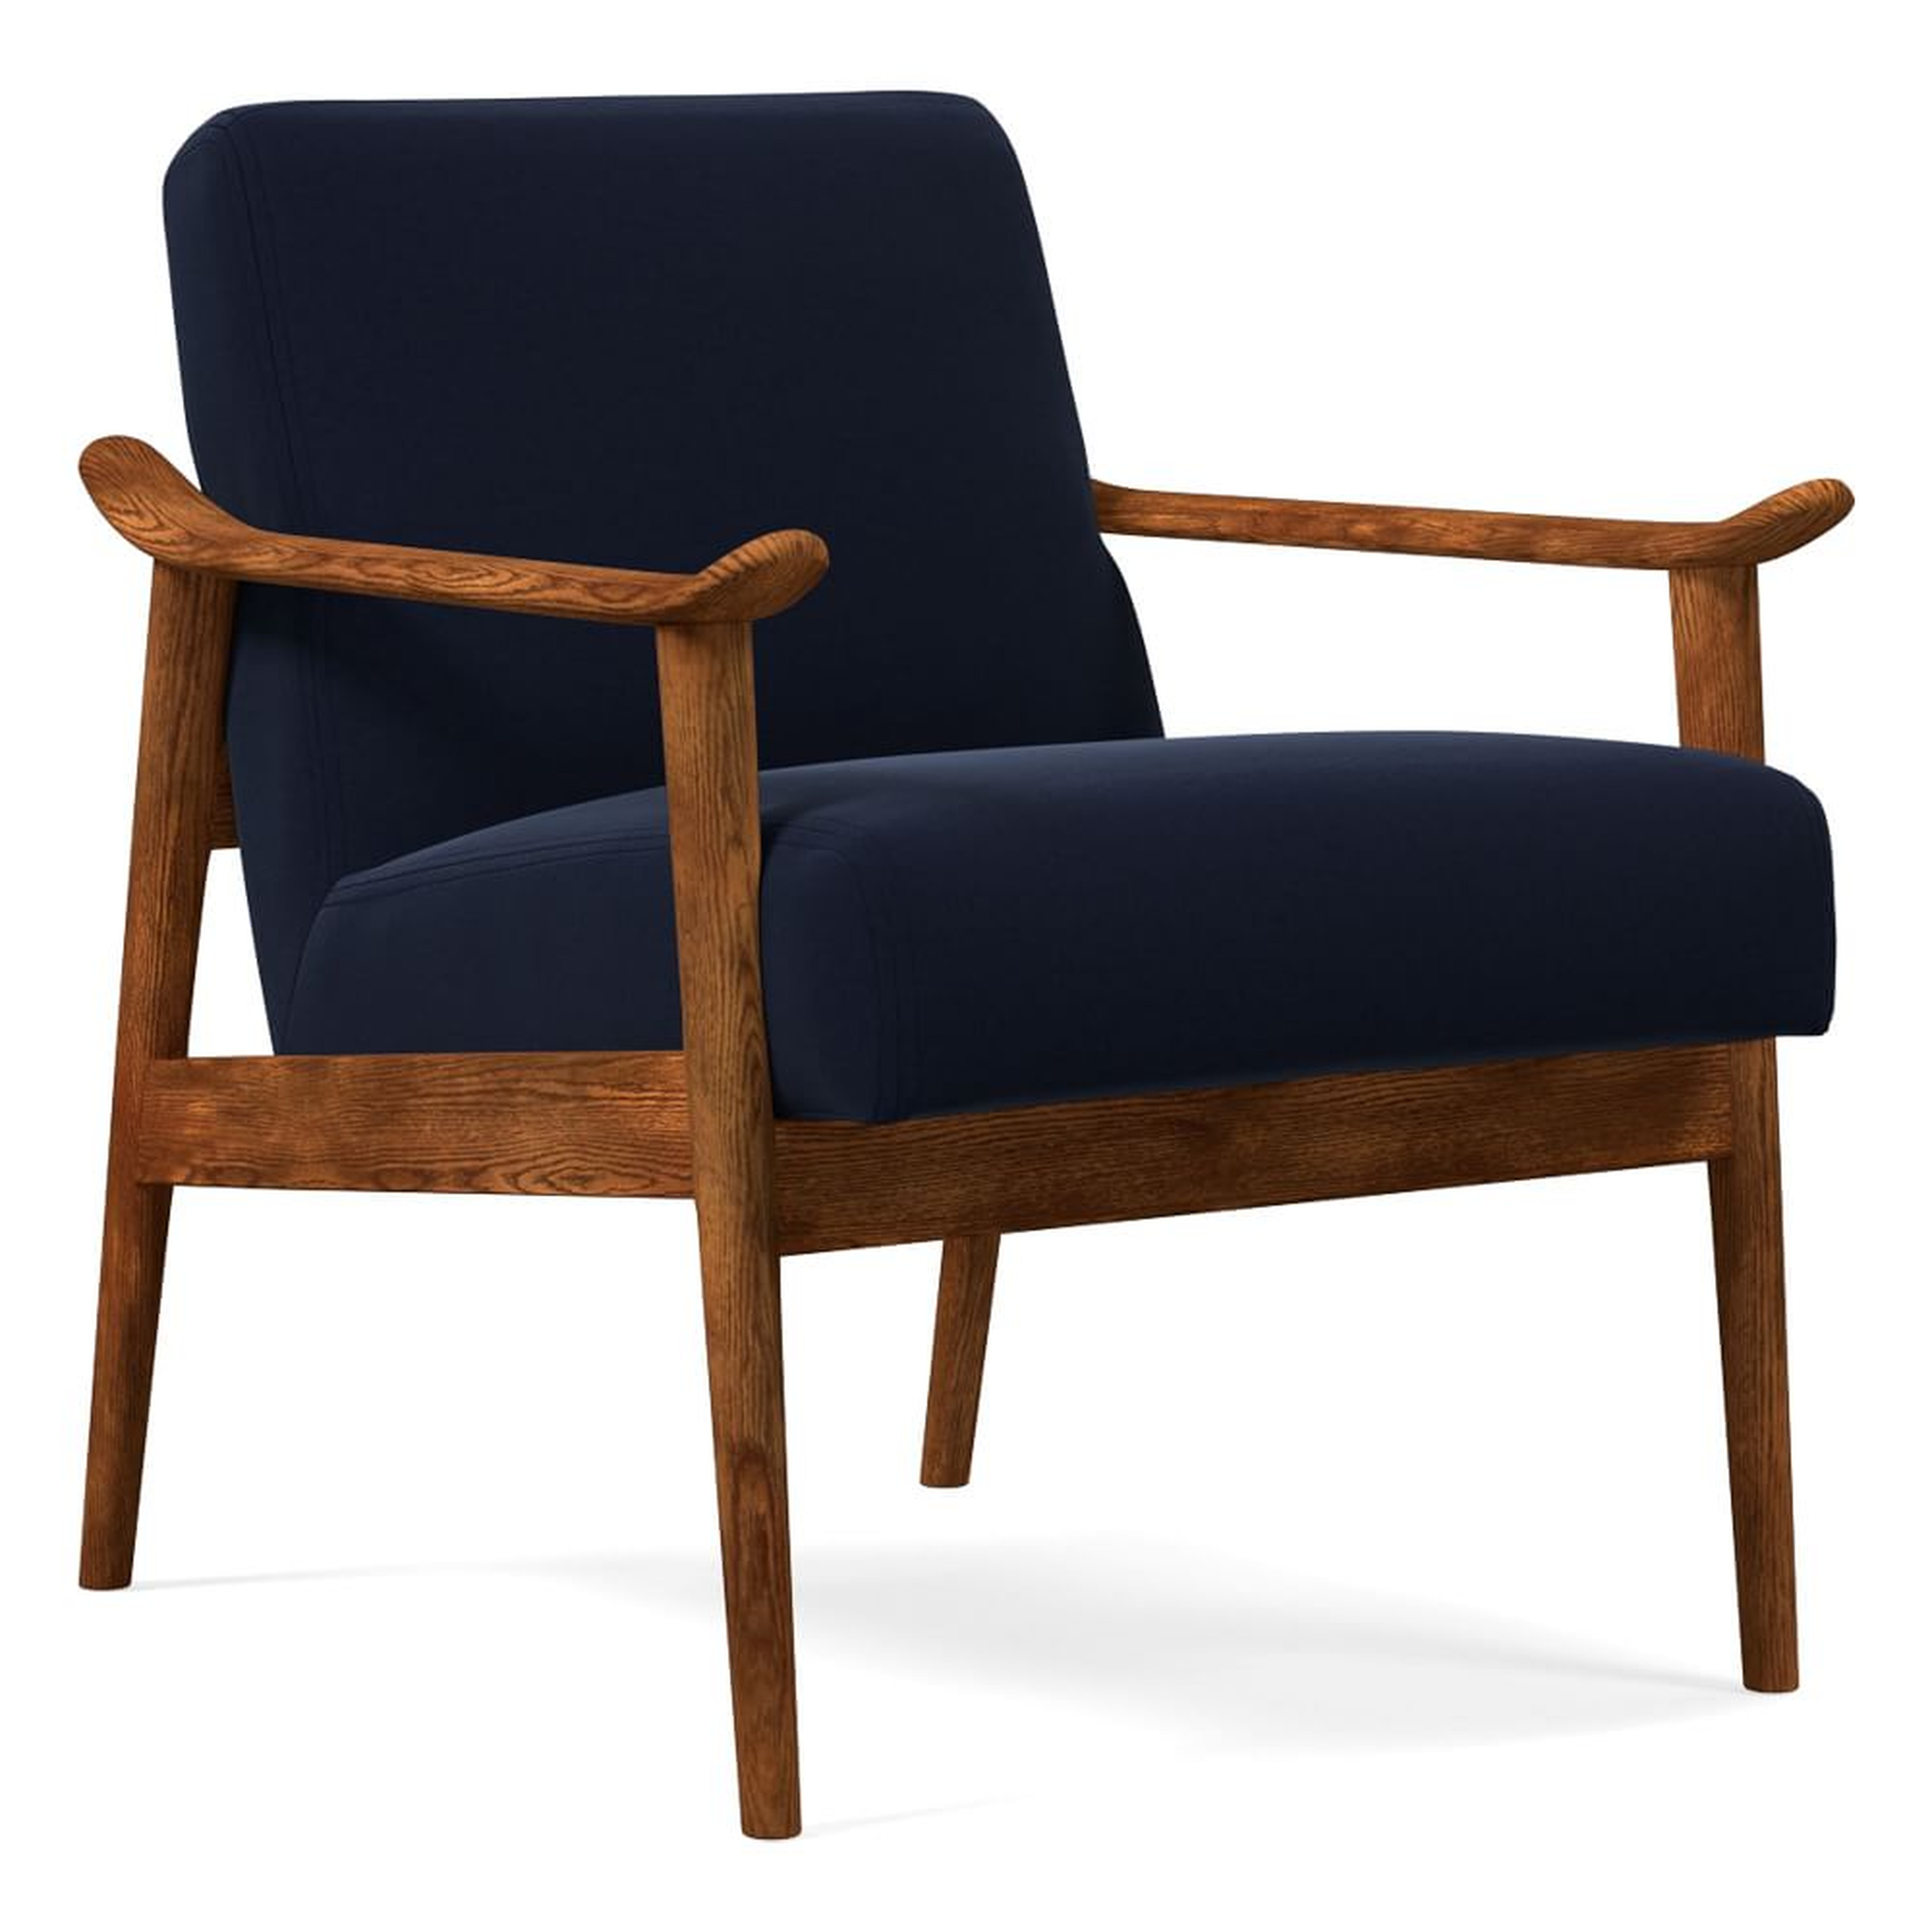 Midcentury Show Wood Chair, Poly, Distressed Velvet, Ink Blue, Pecan - West Elm